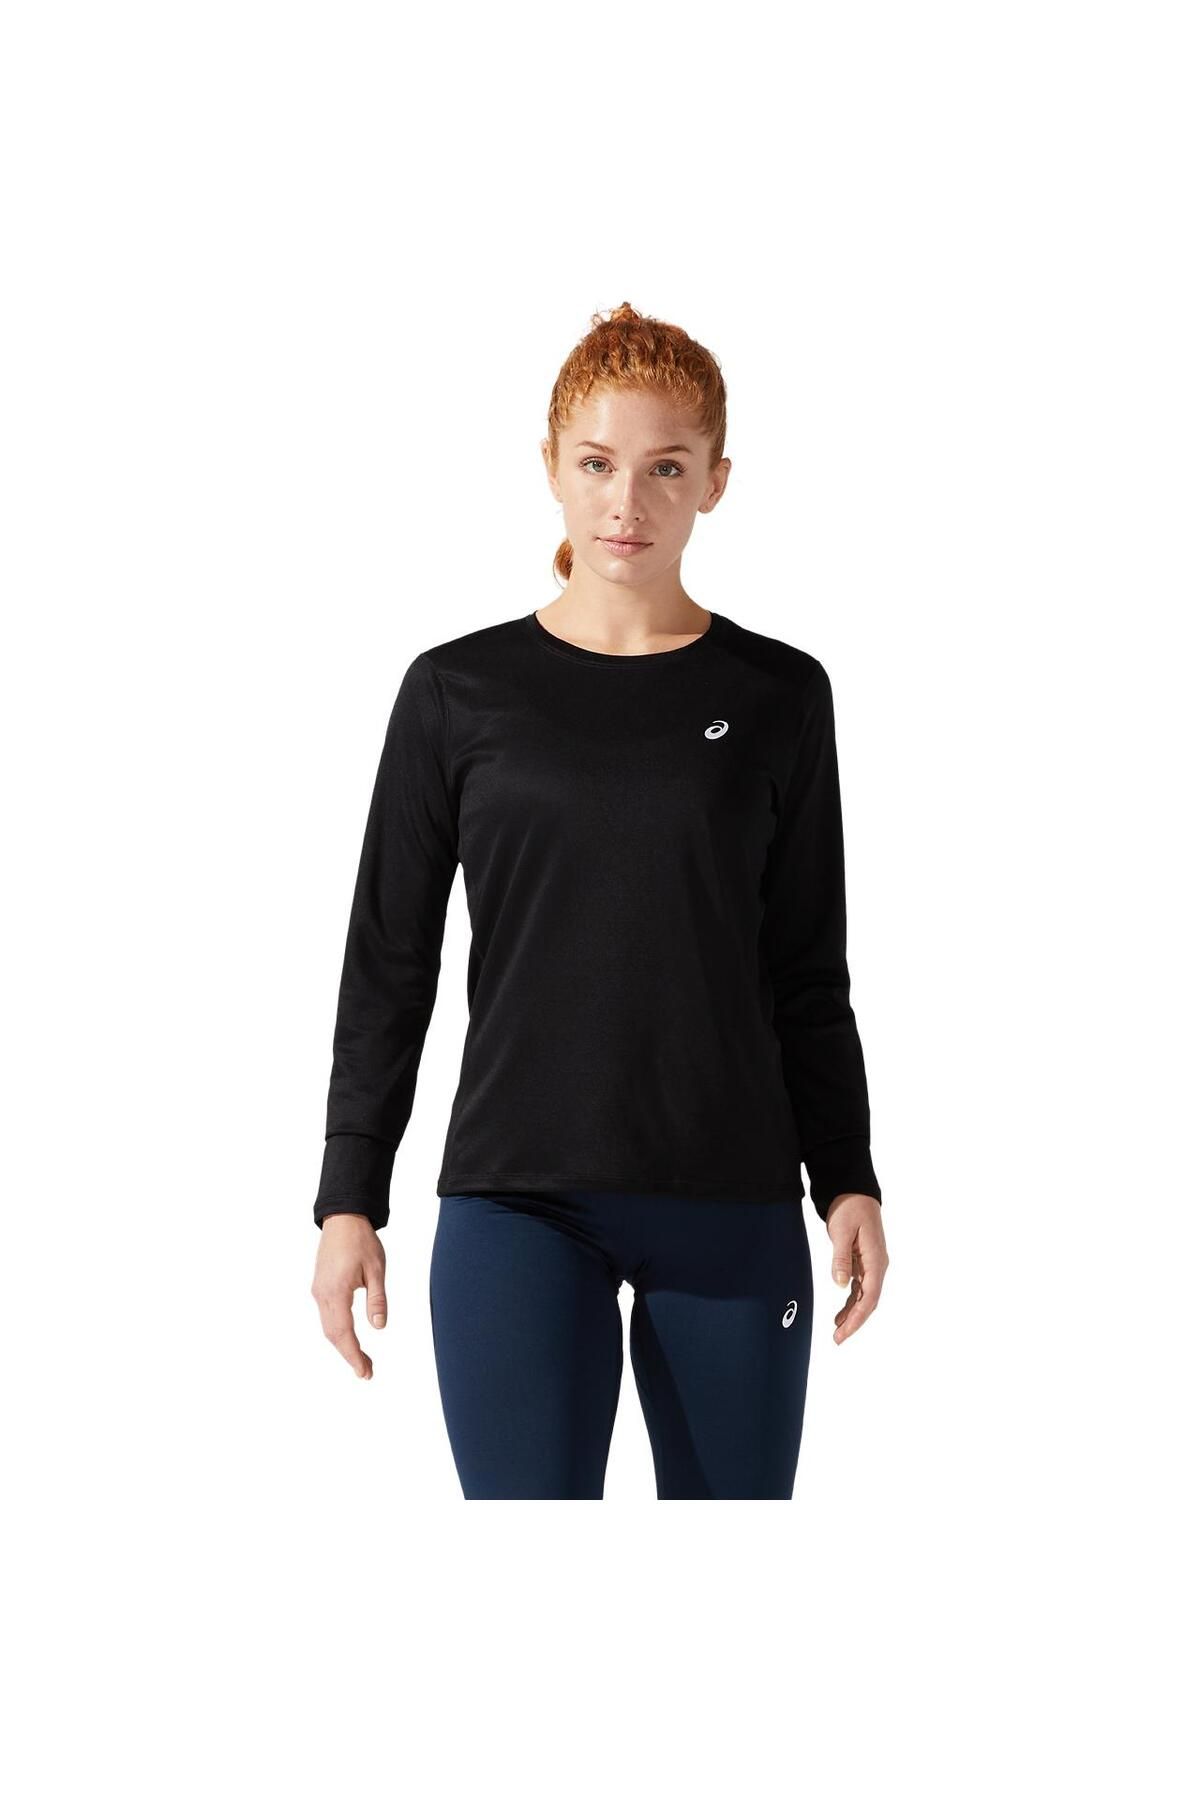 Asics Core Ls Top Kadın Siyah Uzun Kollu Tshirt 2012c333-001